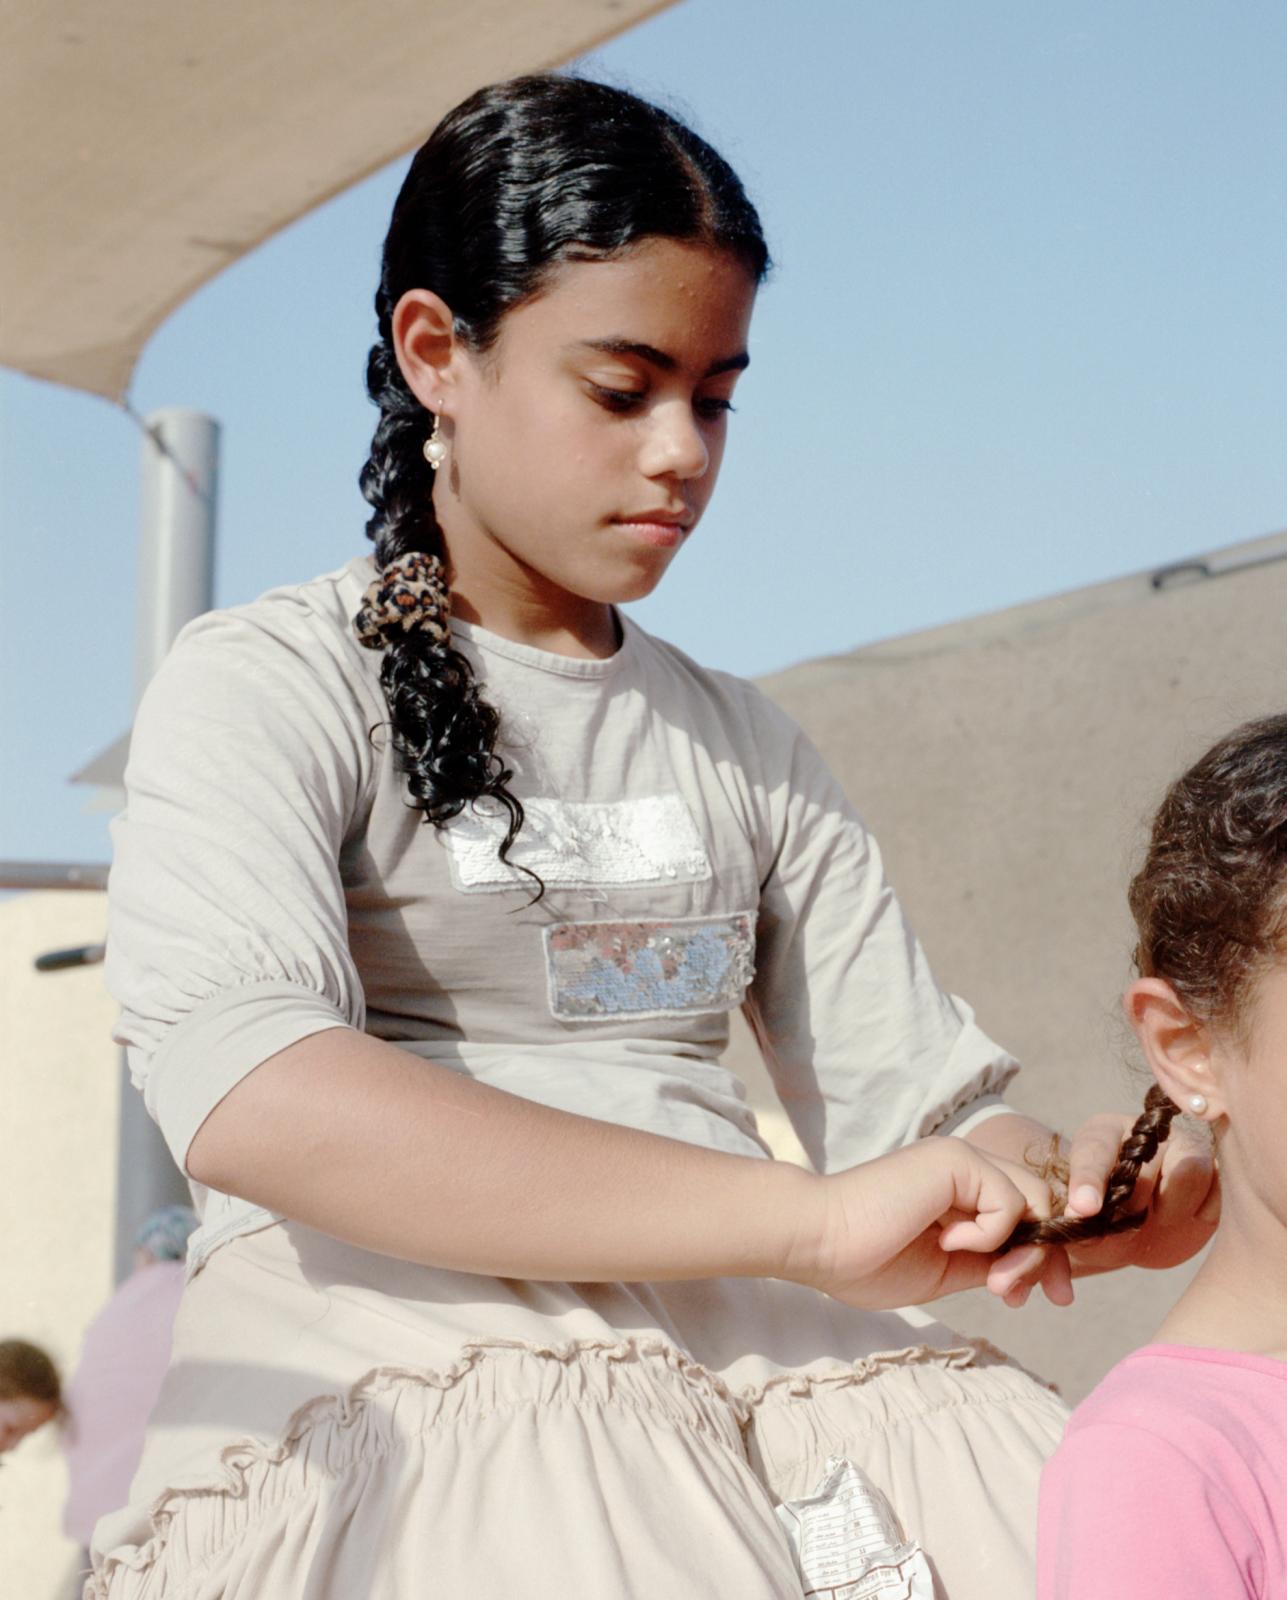 Three Times a Week (ong) -  Ayala, 12, braiding her cousin's hair. 